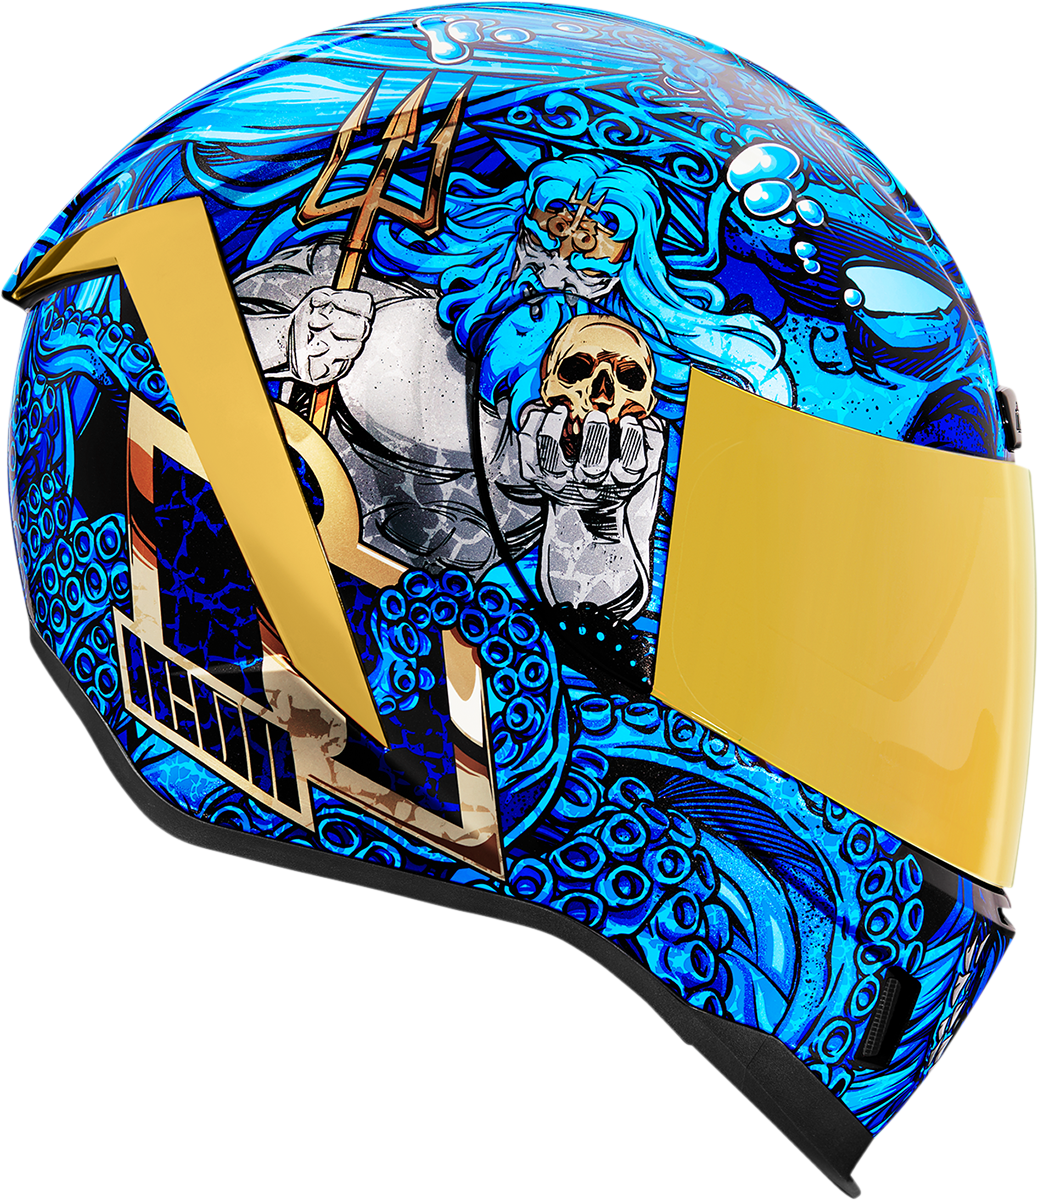 ICON Airform™ Helmet - Ships Company - Blue - Small 0101-13678